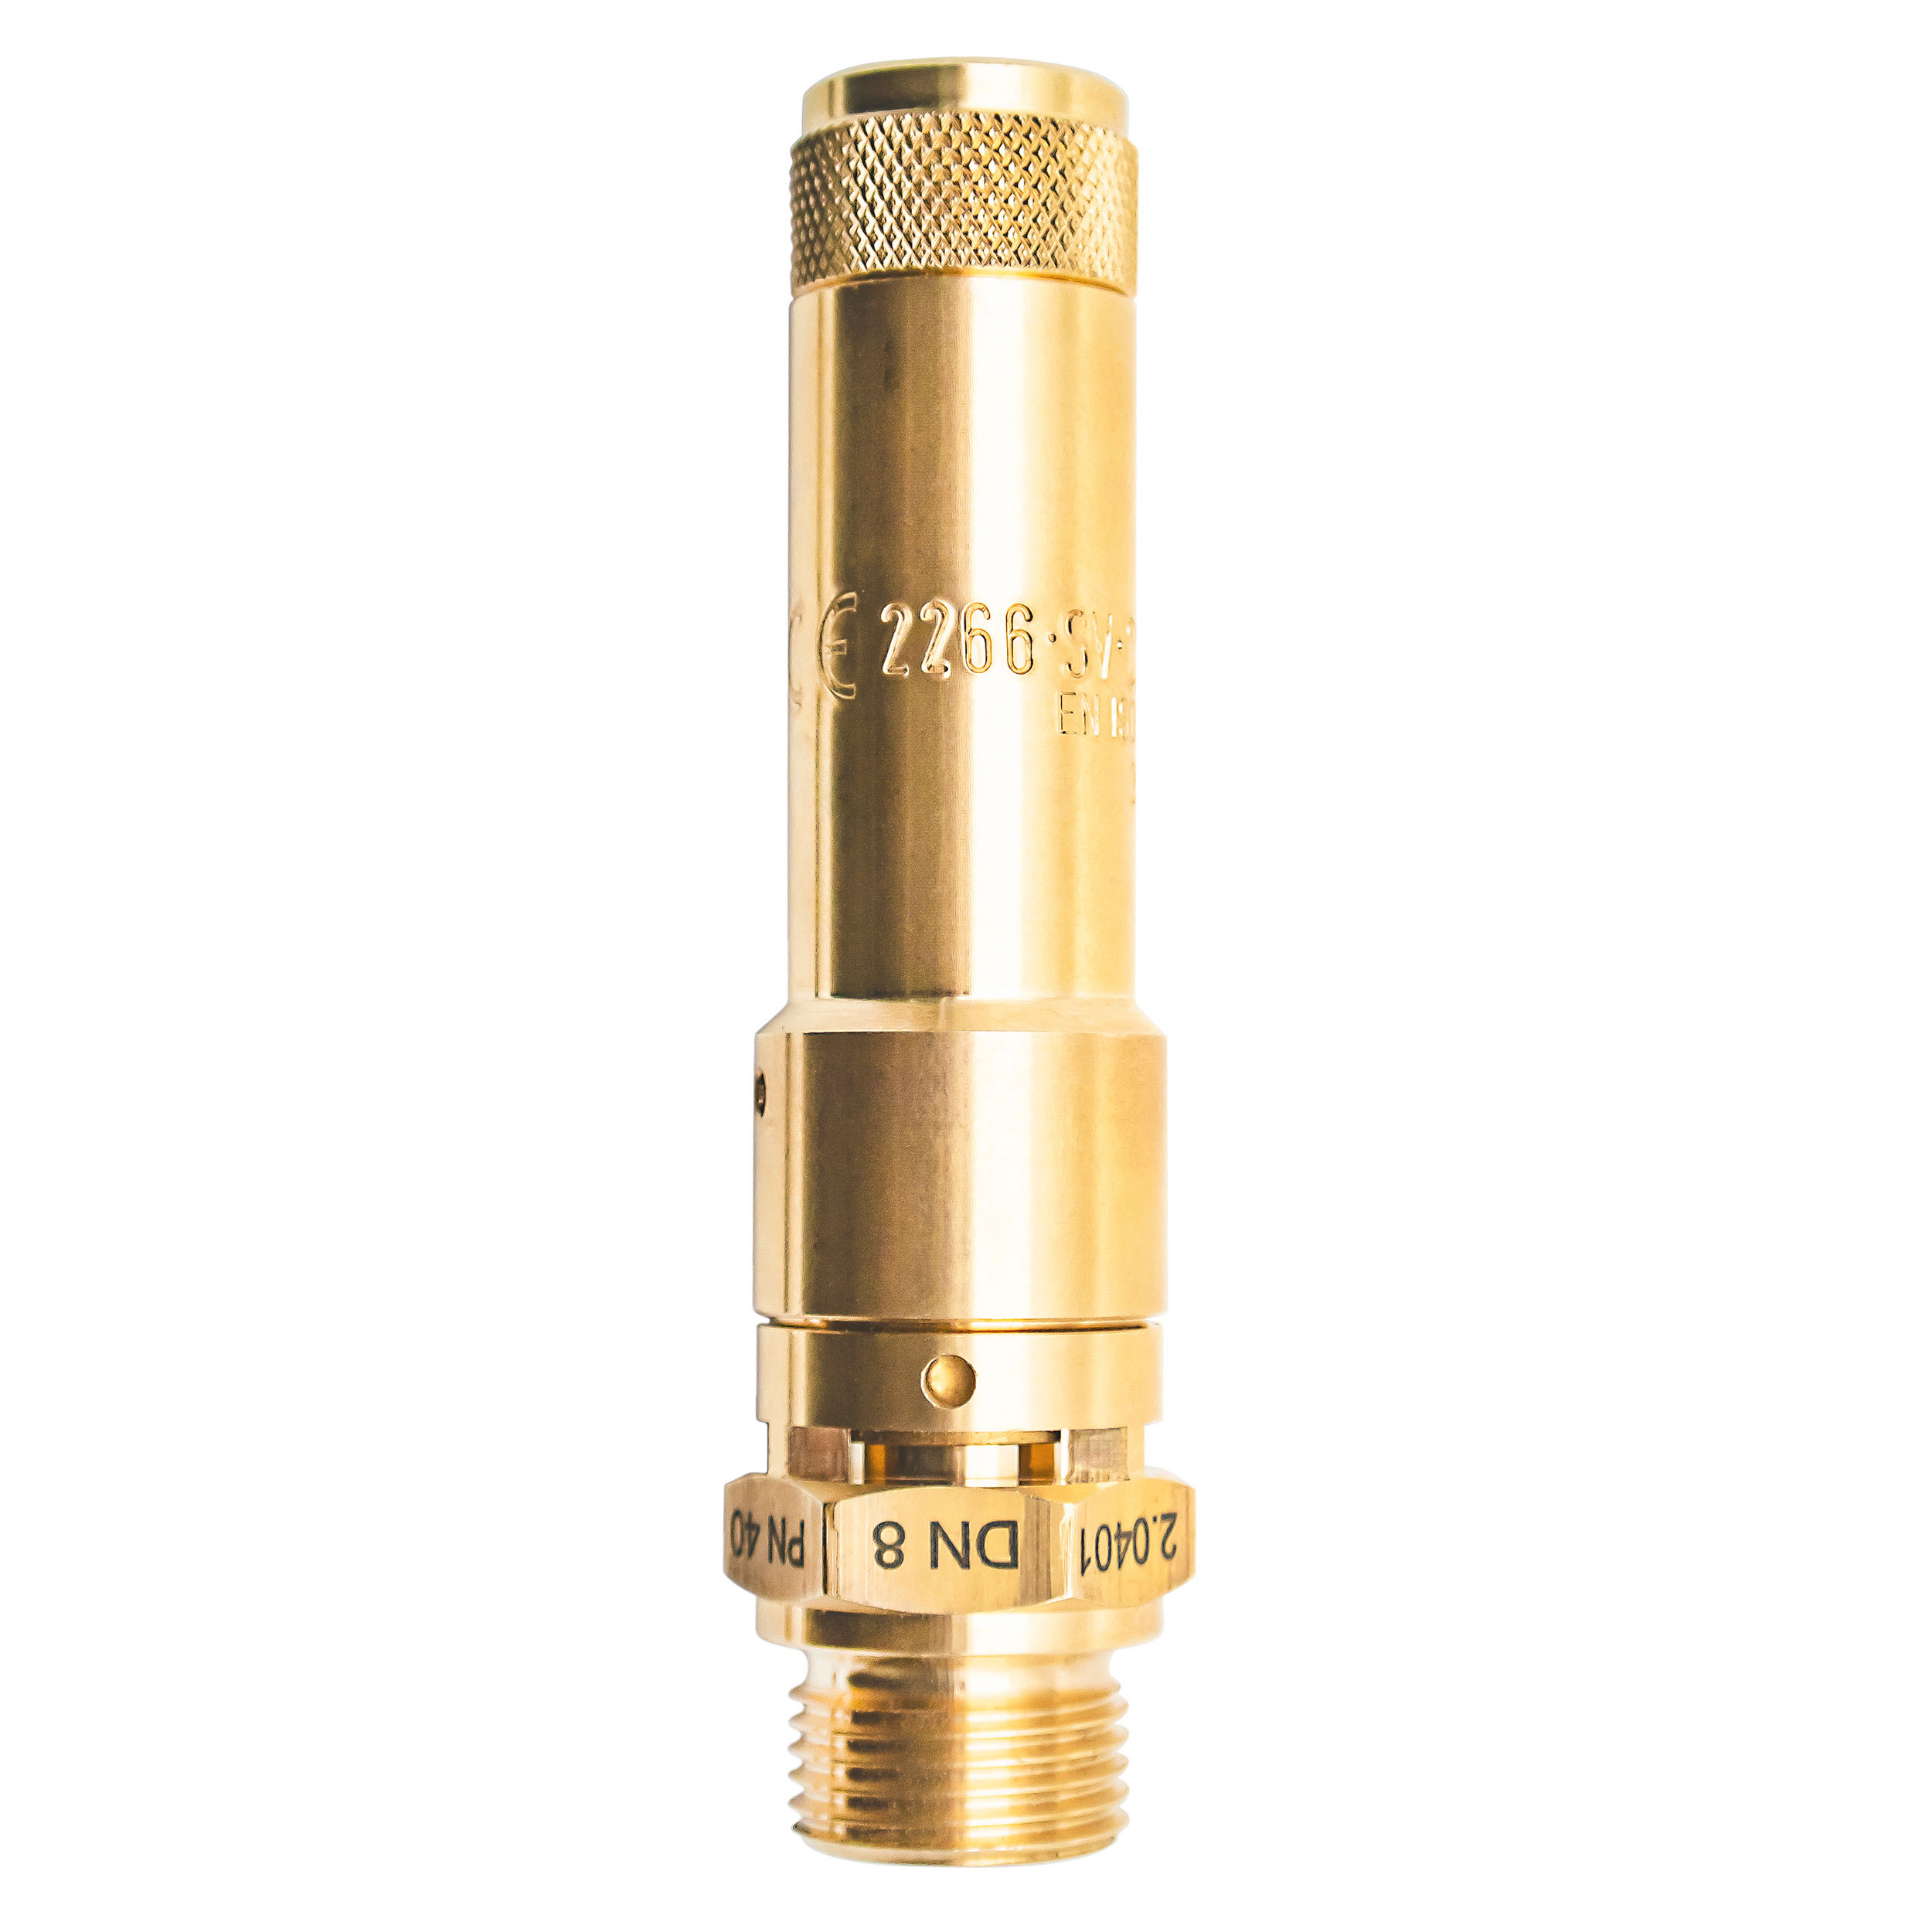 Component-tested safety valve DN 8, G¼, pressure: 20.1-27 bar